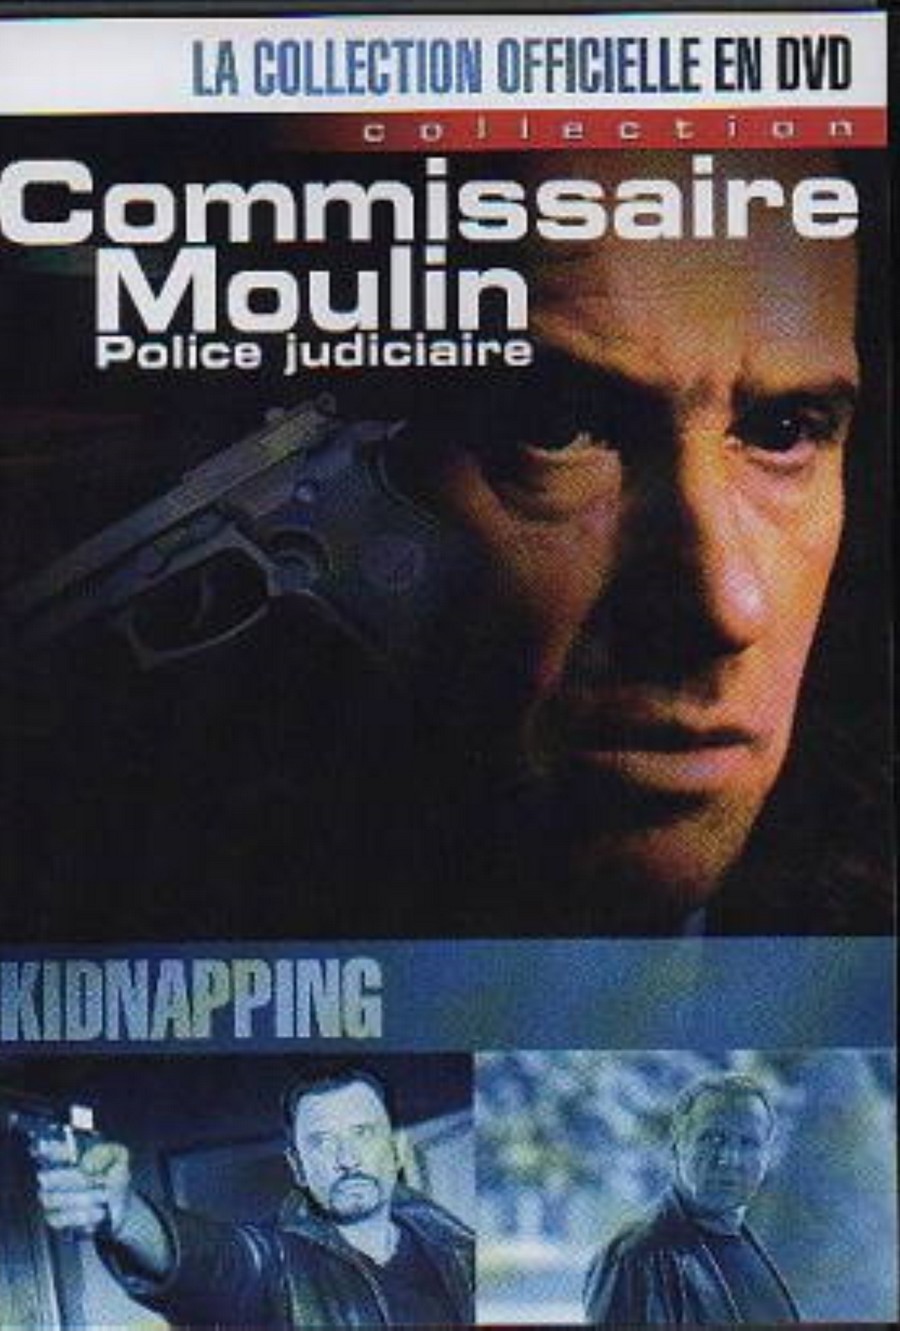 LES FILMS DE JOHNNY 'COMMISSAIRE MOULIN ( KIDNAPPING )' 2005 Moulin10